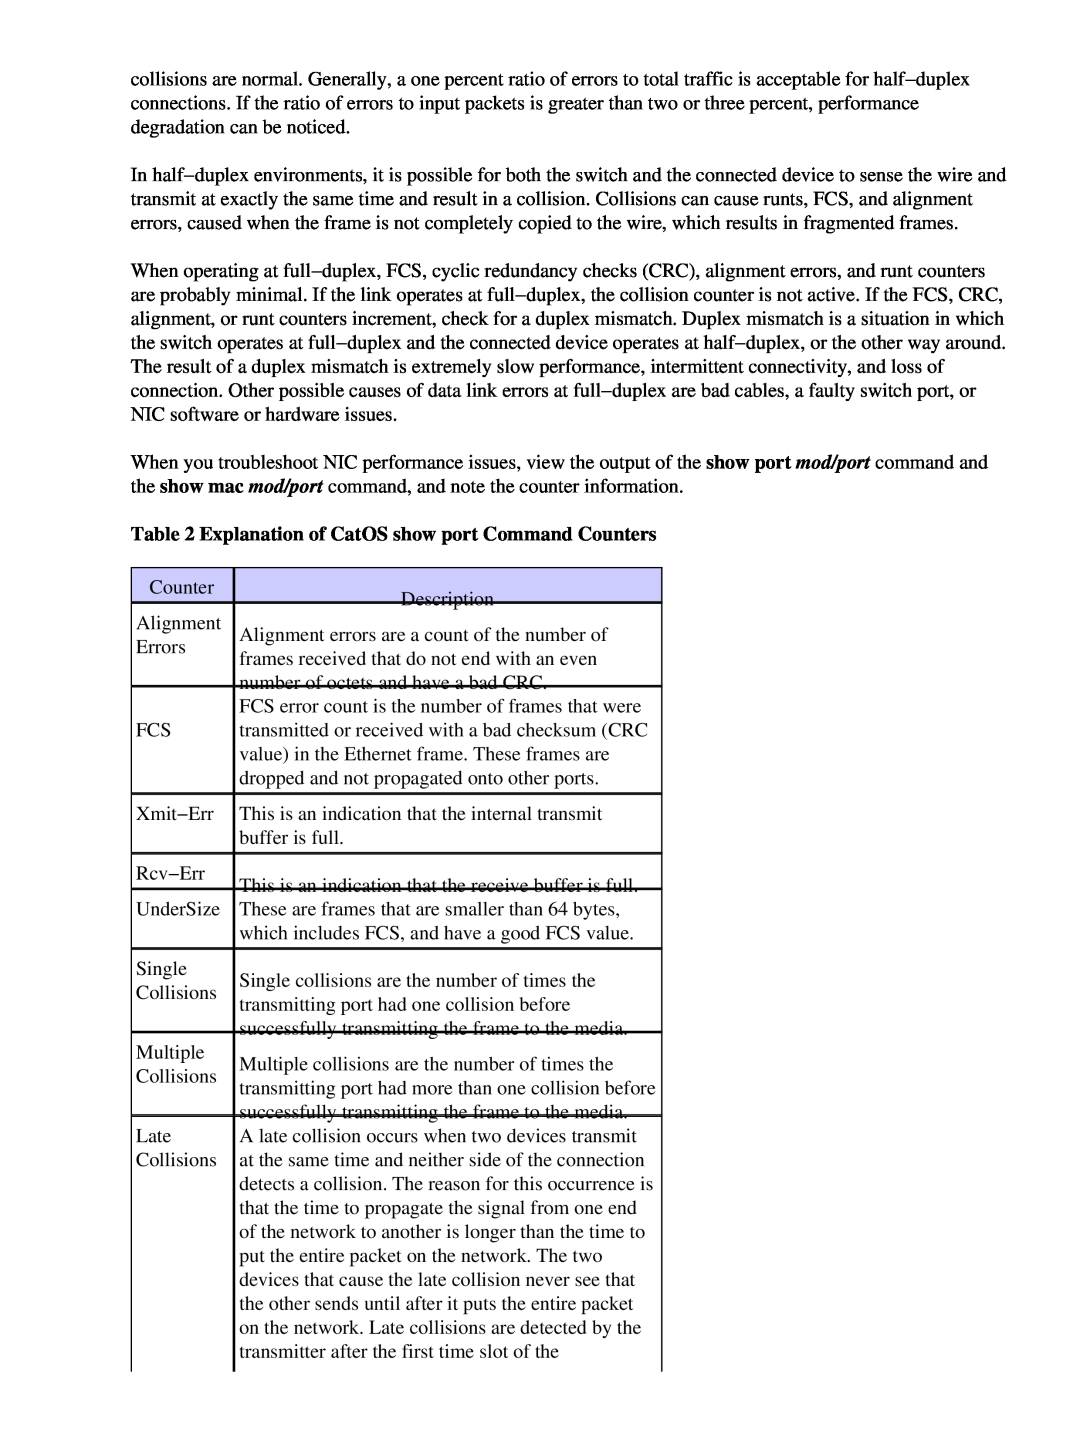 Cisco Systems 17053 appendix Explanation of CatOS show port Command Counters 